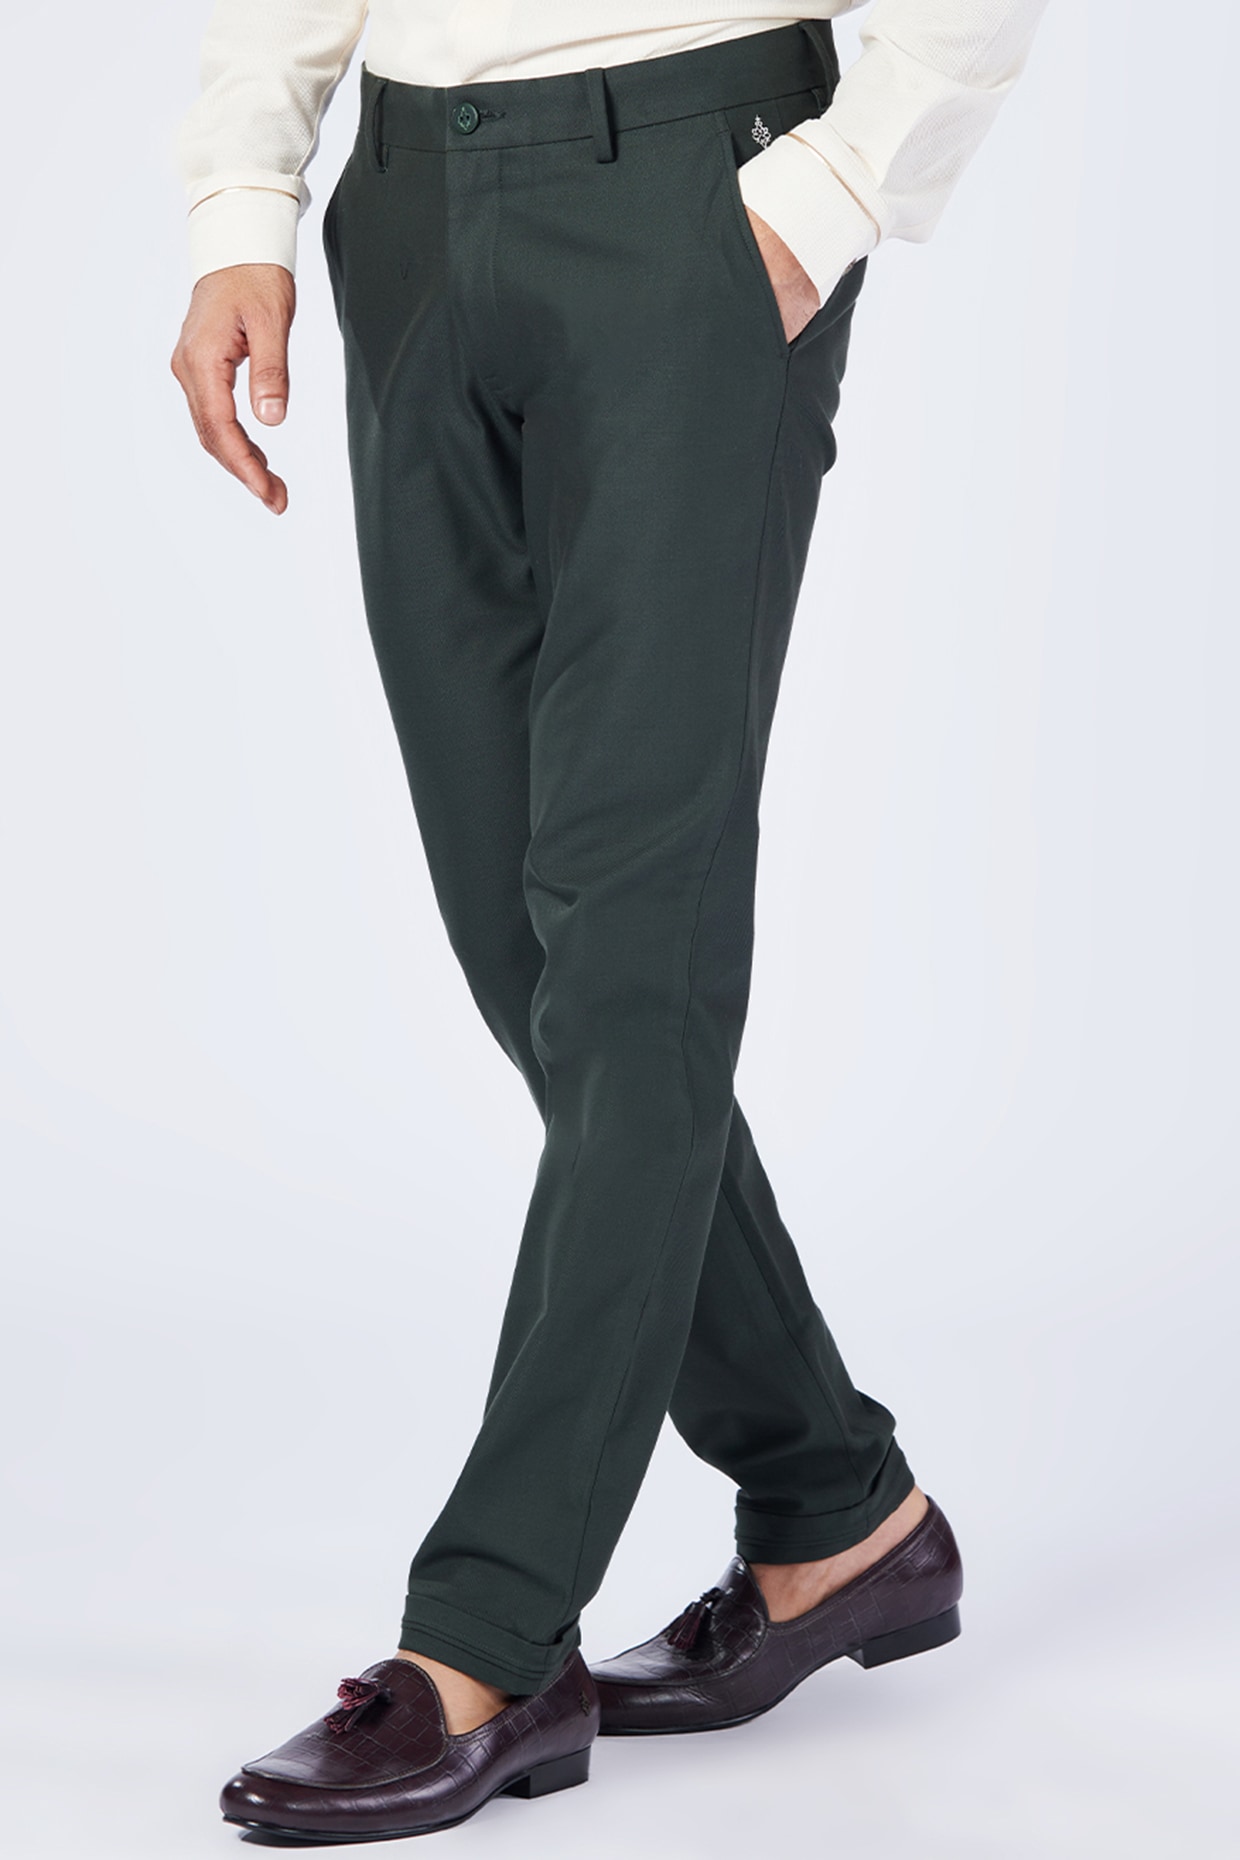 Grey Formal Trouser for Men  Self Design  Terry Rayon Slim Fit  JadeBlue   JadeBlue Lifestyle